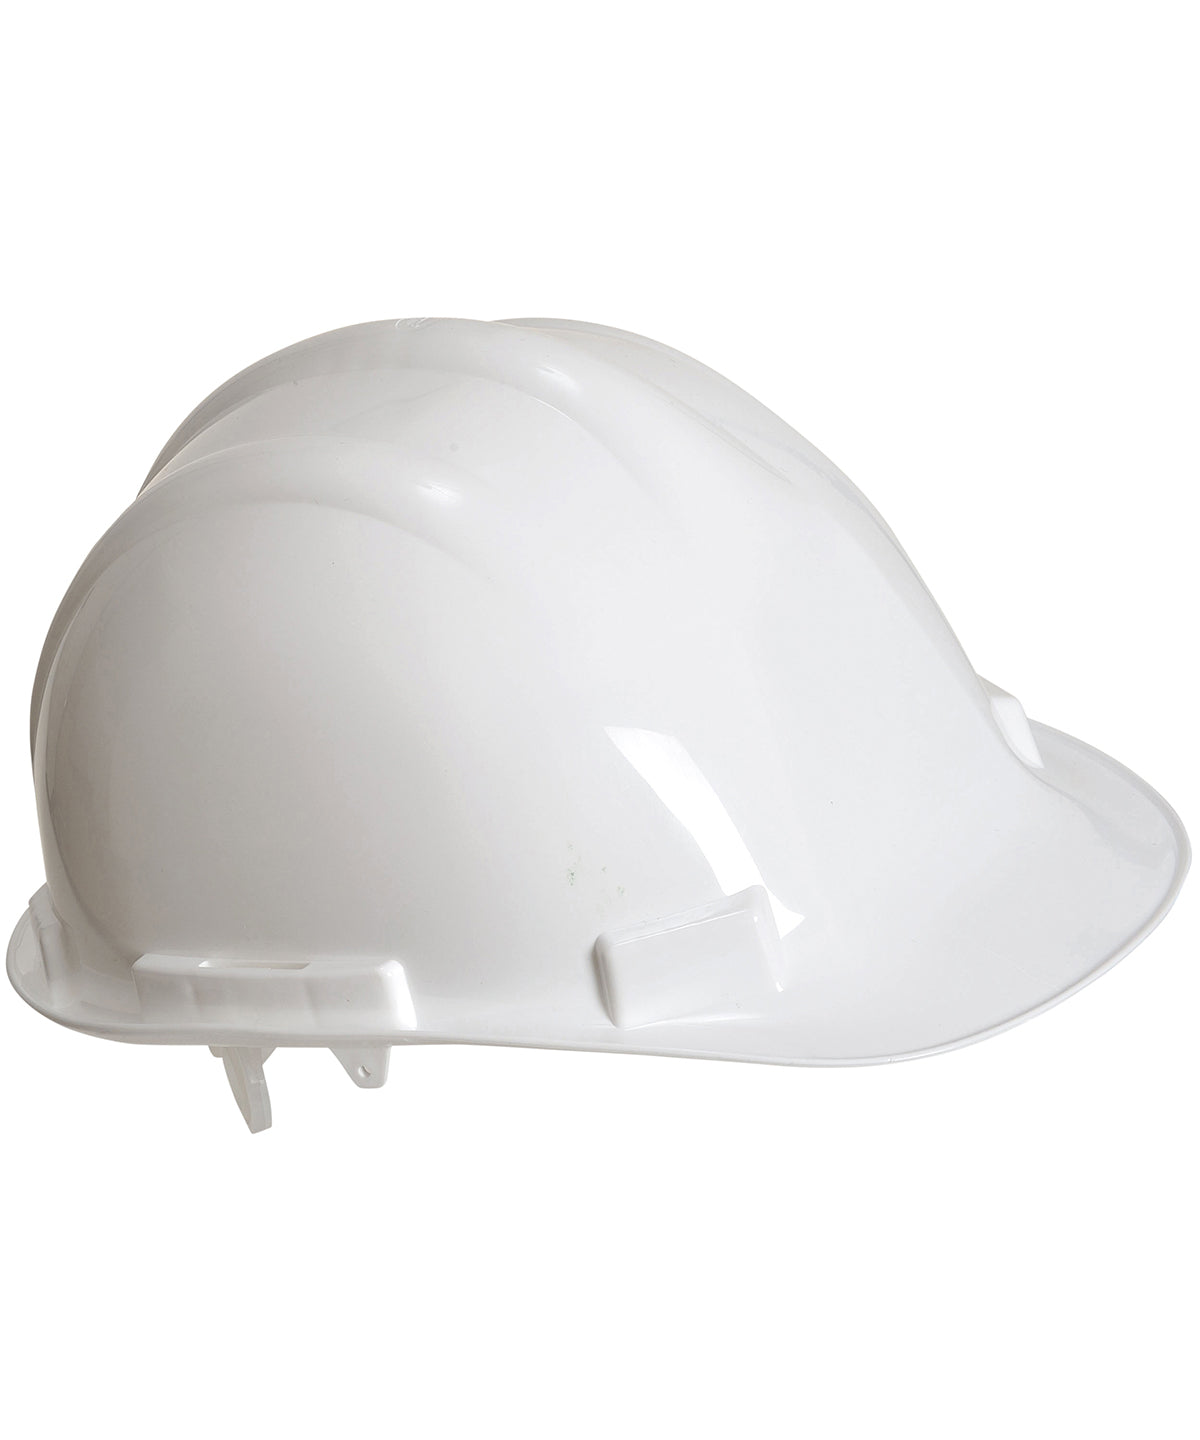 Expertbase safety helmet (PW50)